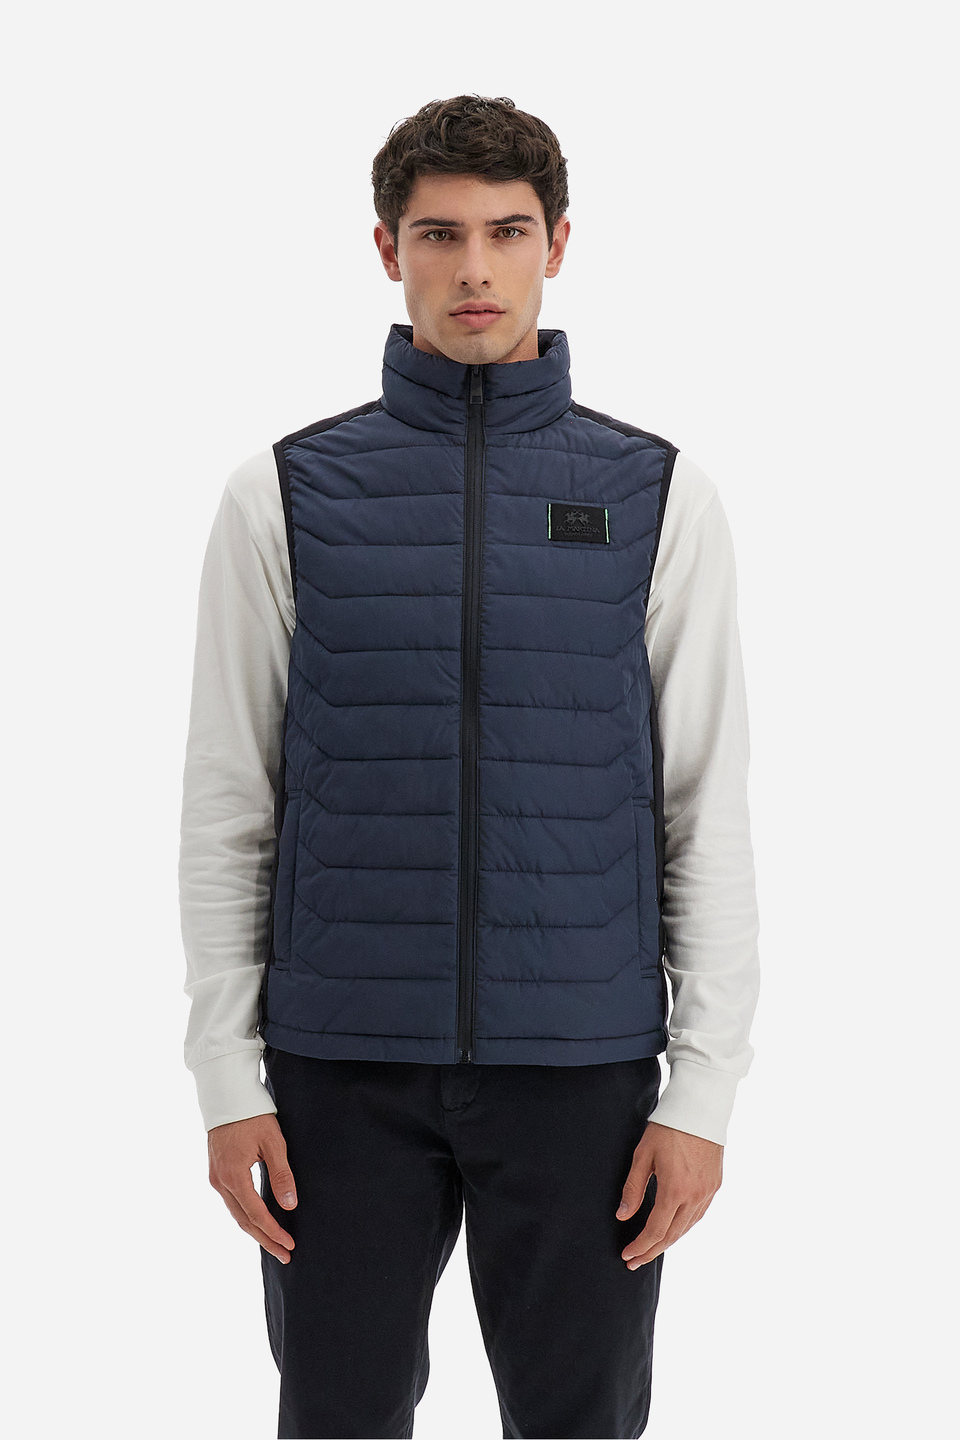 Men's sleeveless bomber jacket full zip high collar Logos - Varen | La Martina - Official Online Shop